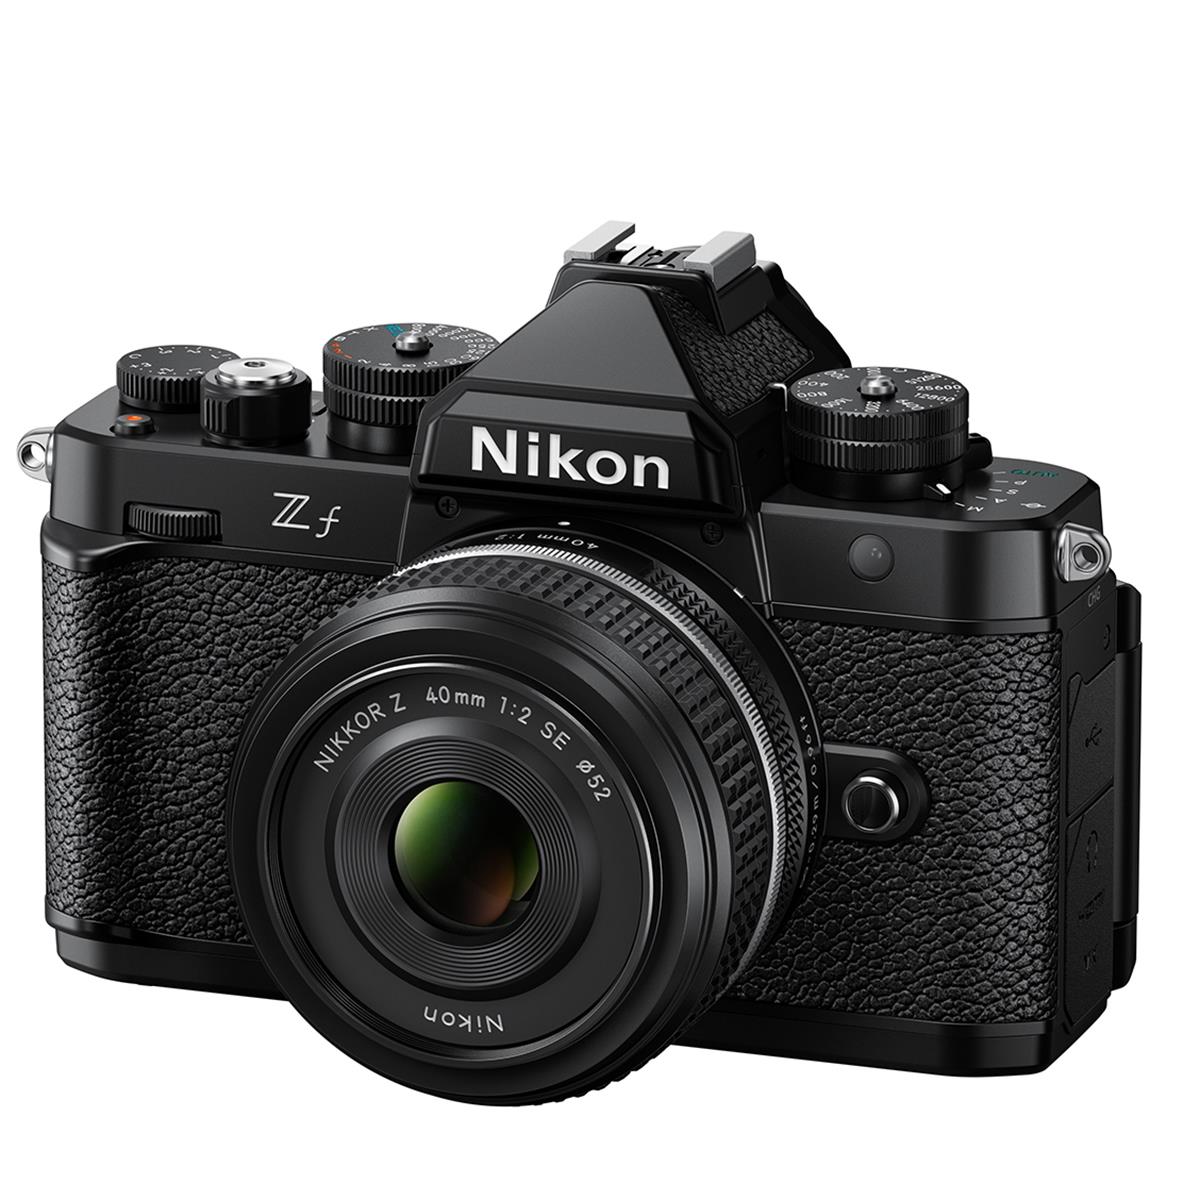 Image of Nikon Z f Mirrorless Camera with NIKKOR Z 40mm f/2 SE Lens